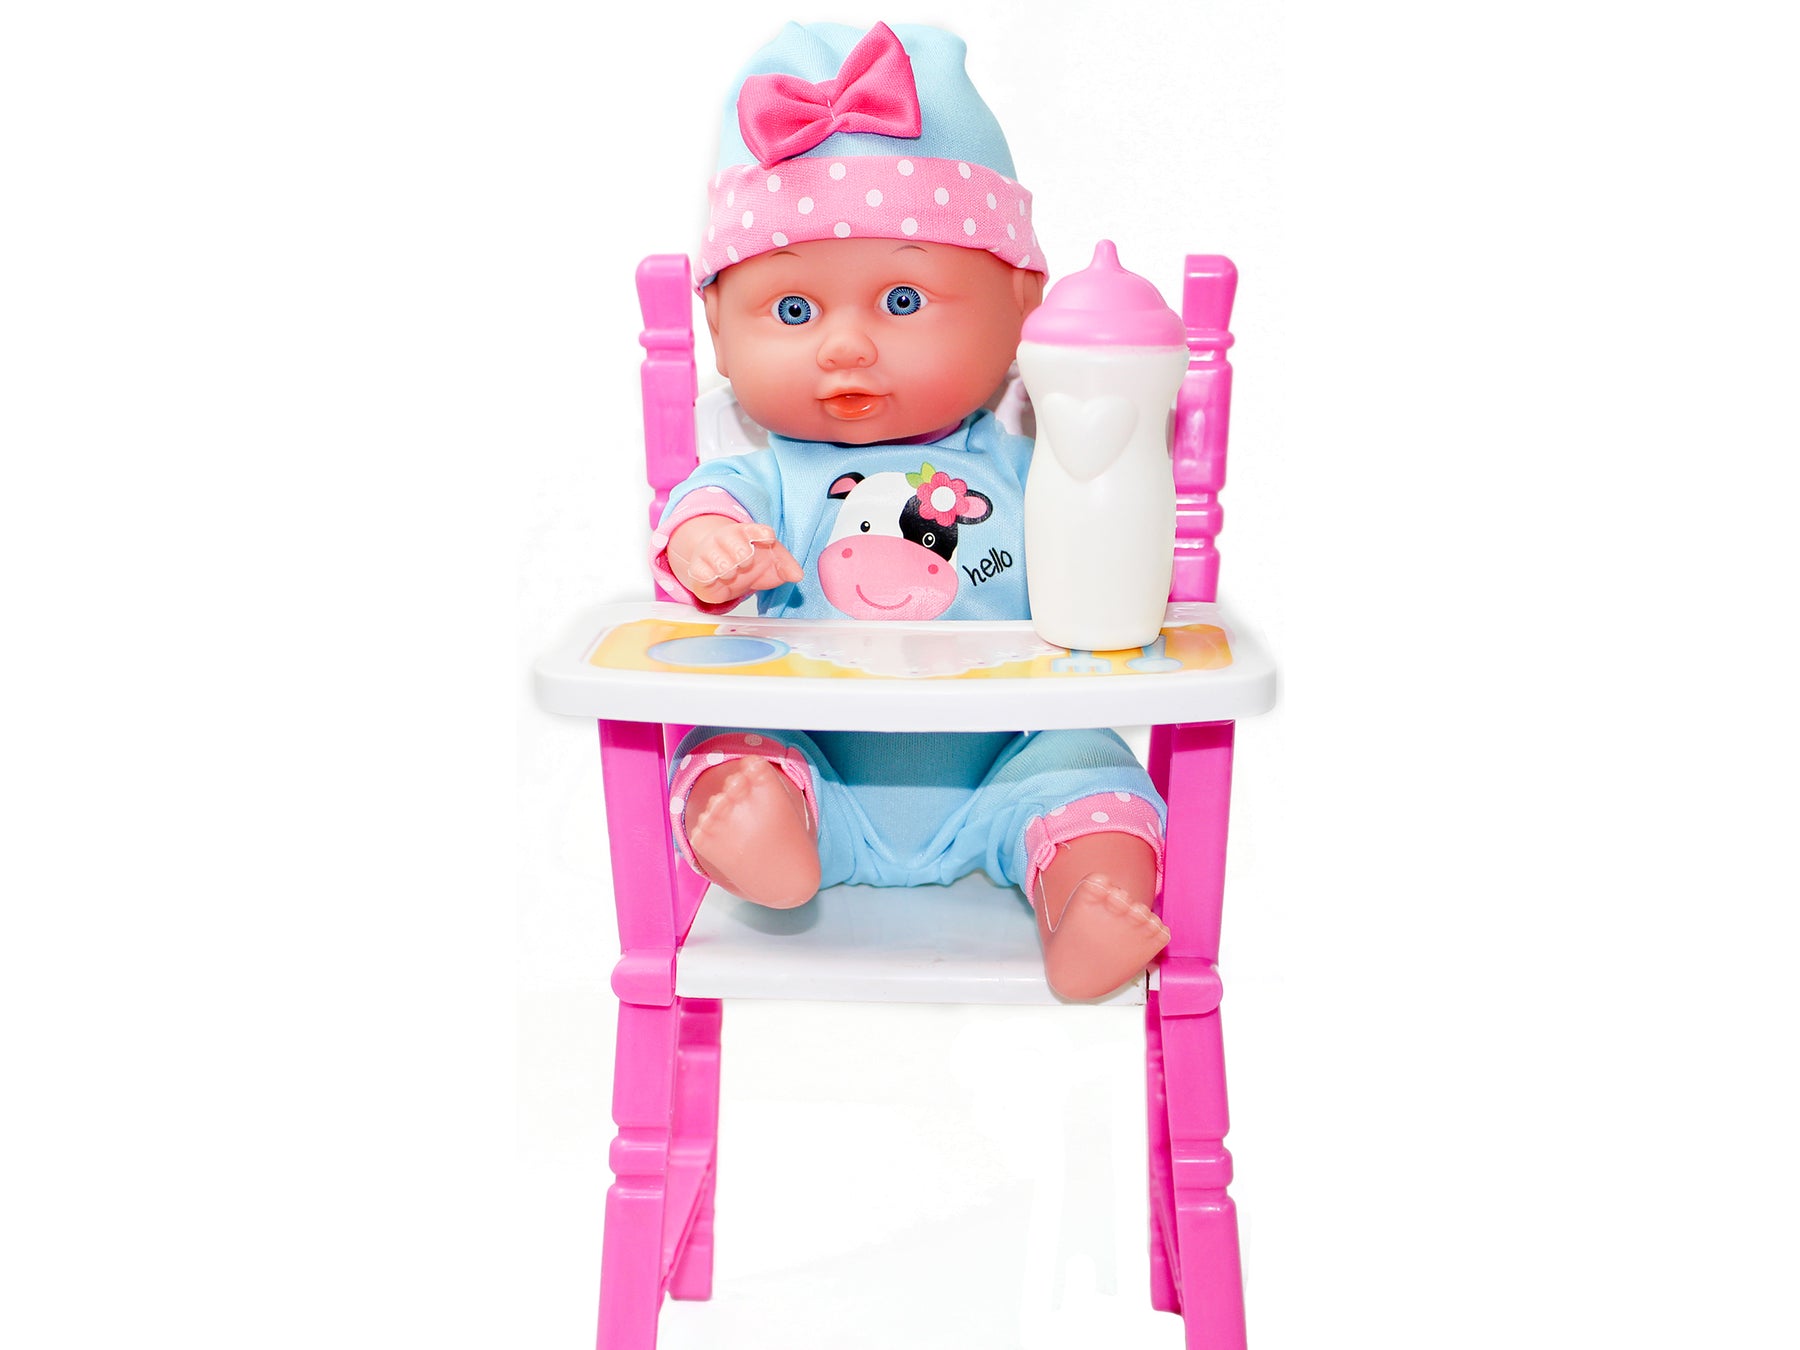 baby high chair doll